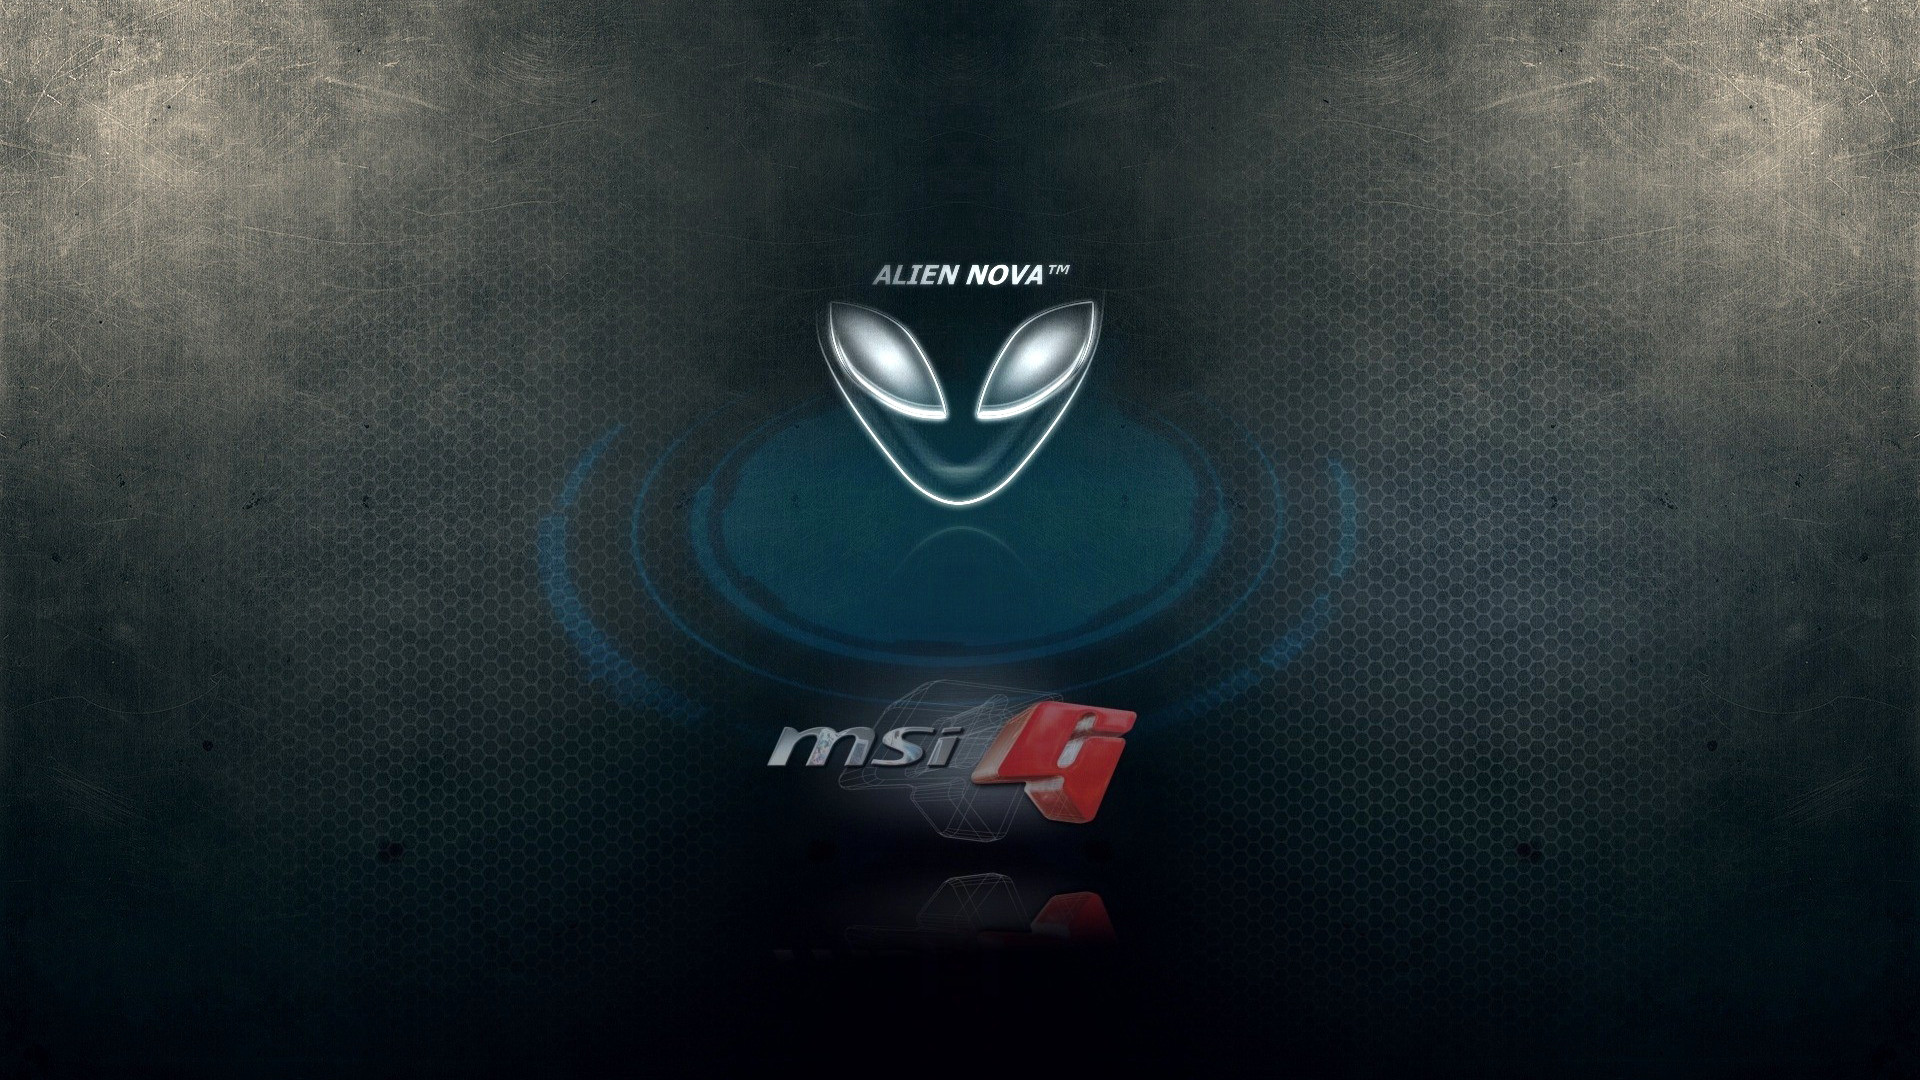 1920x1080 alienware and MSi g logo hd 